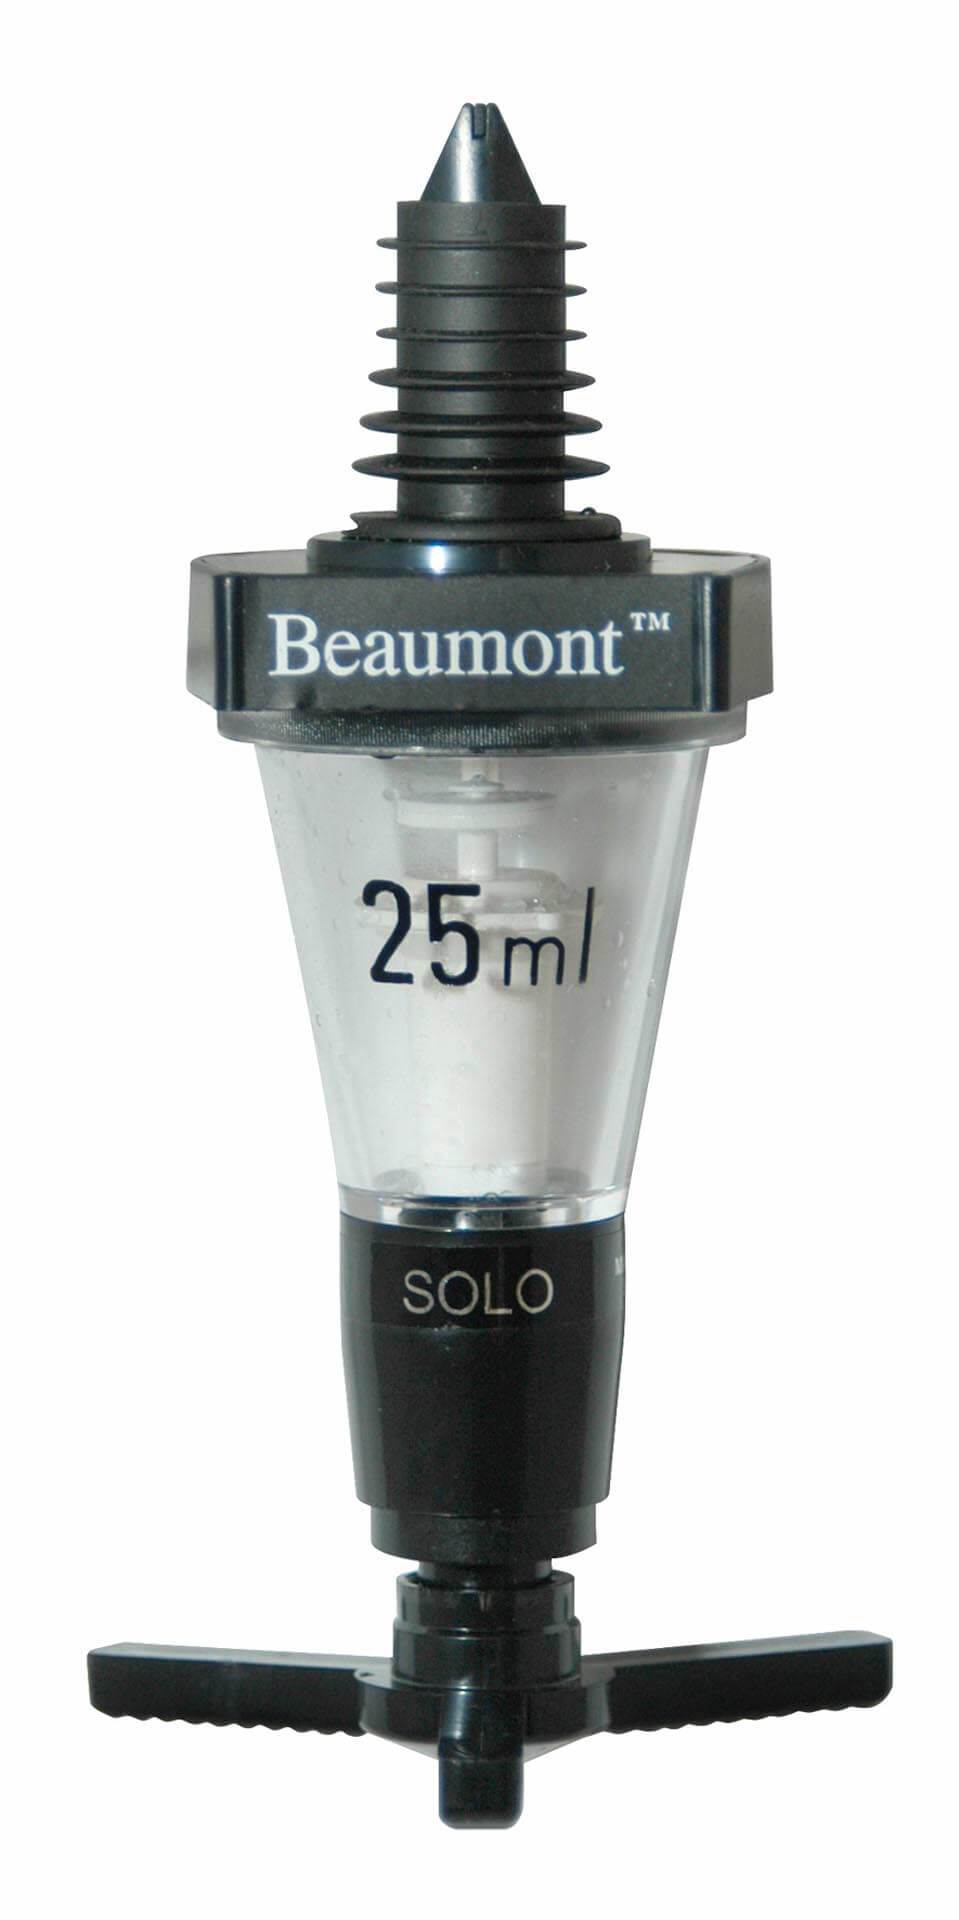 BEAUMONT 25ml SOLO CLASSICAL SPIRIT MEASURE BAR-3103